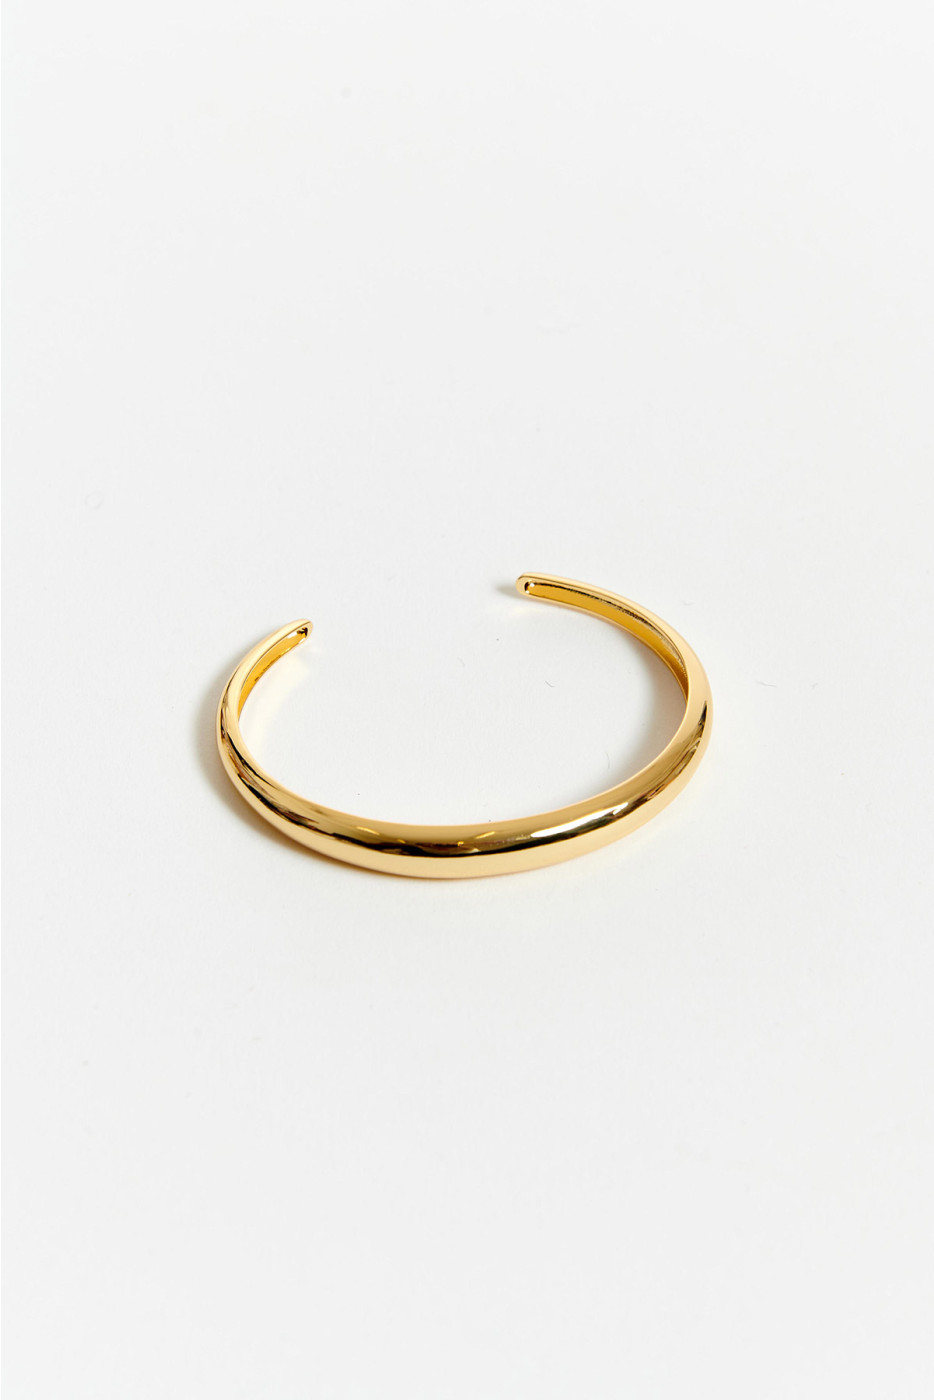 DOMINIQUE Shashi® gold bracelet | Banana Moon®